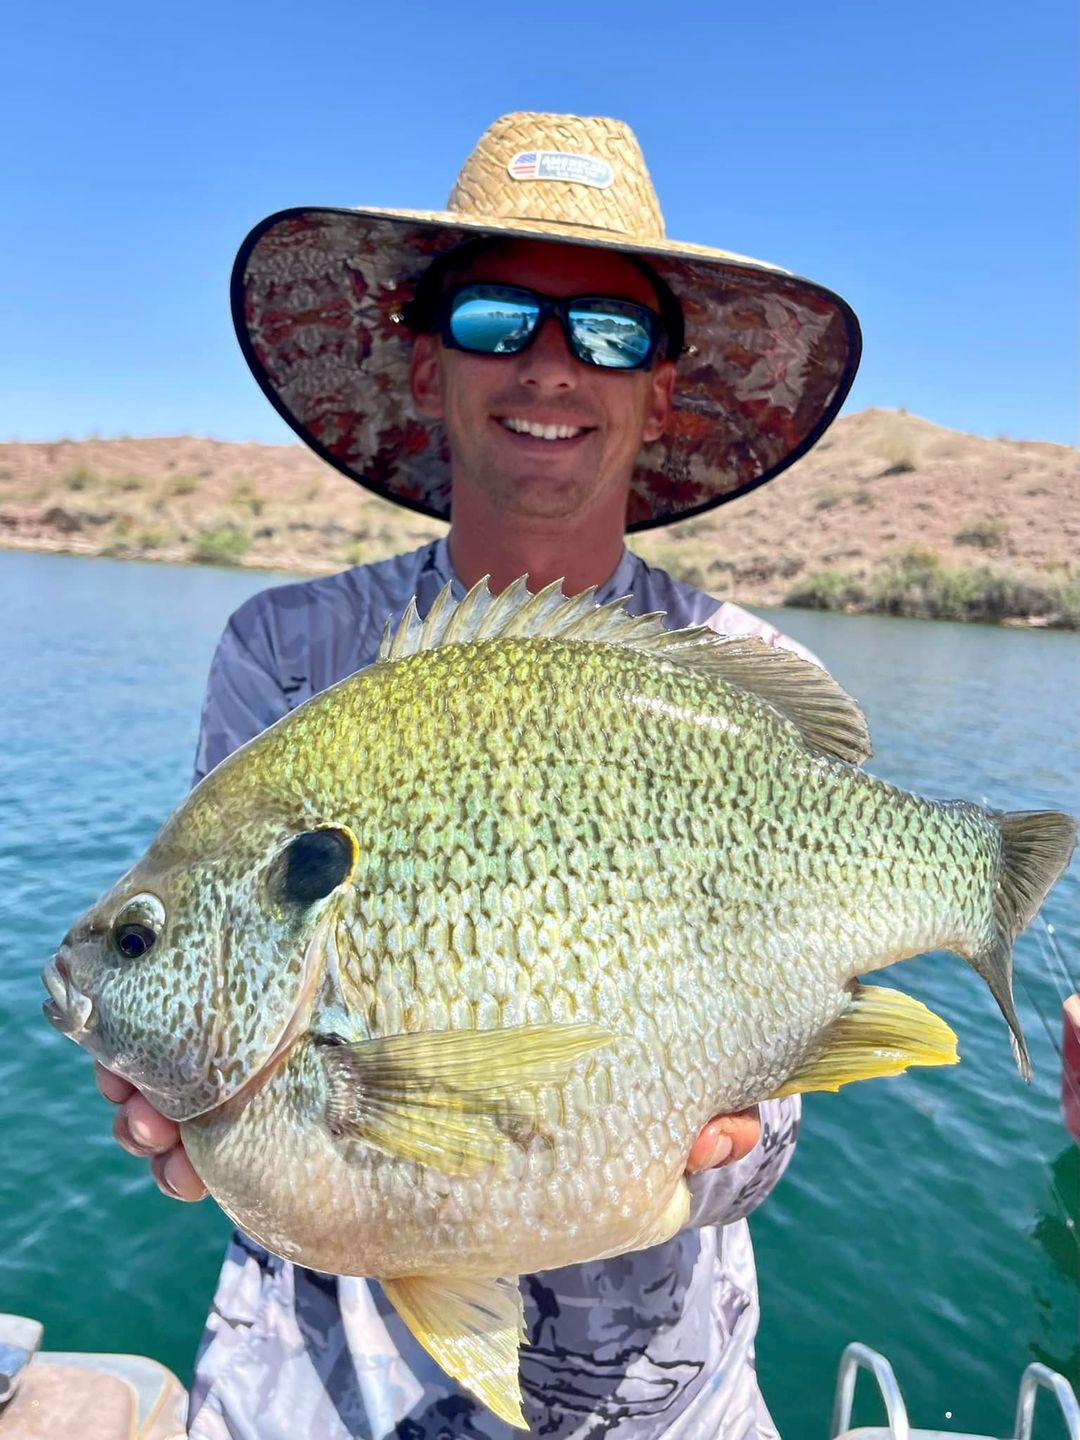 Fisherman Catches Giant 5-Pound Redear Sunfish on Lake Havasu